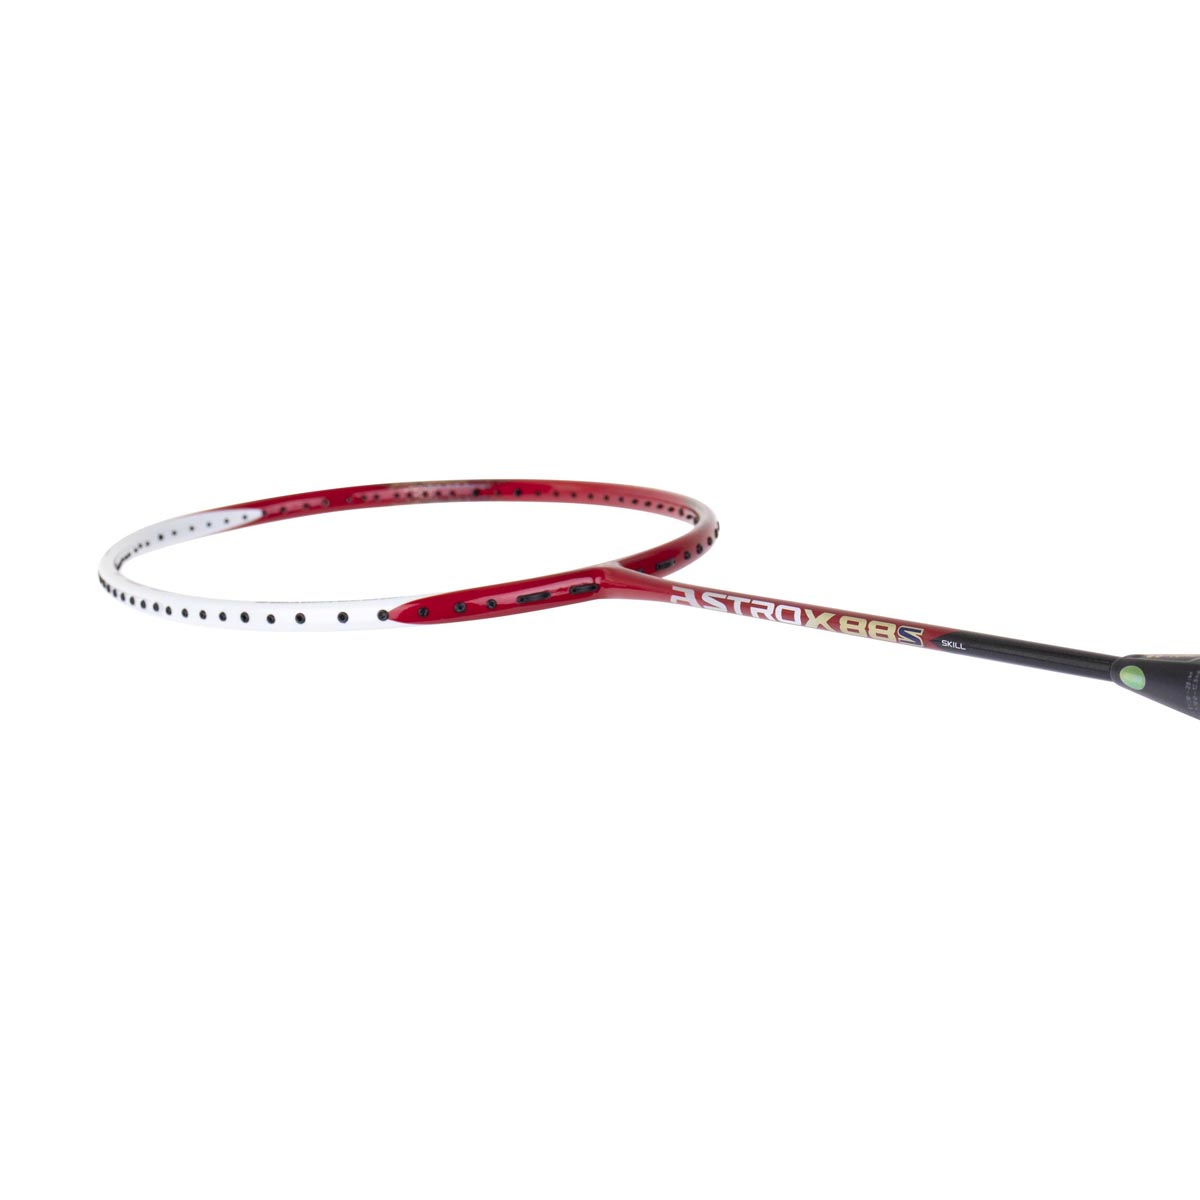 Badmintonschläger - YONEX - ASTROX 88SDetailbild4